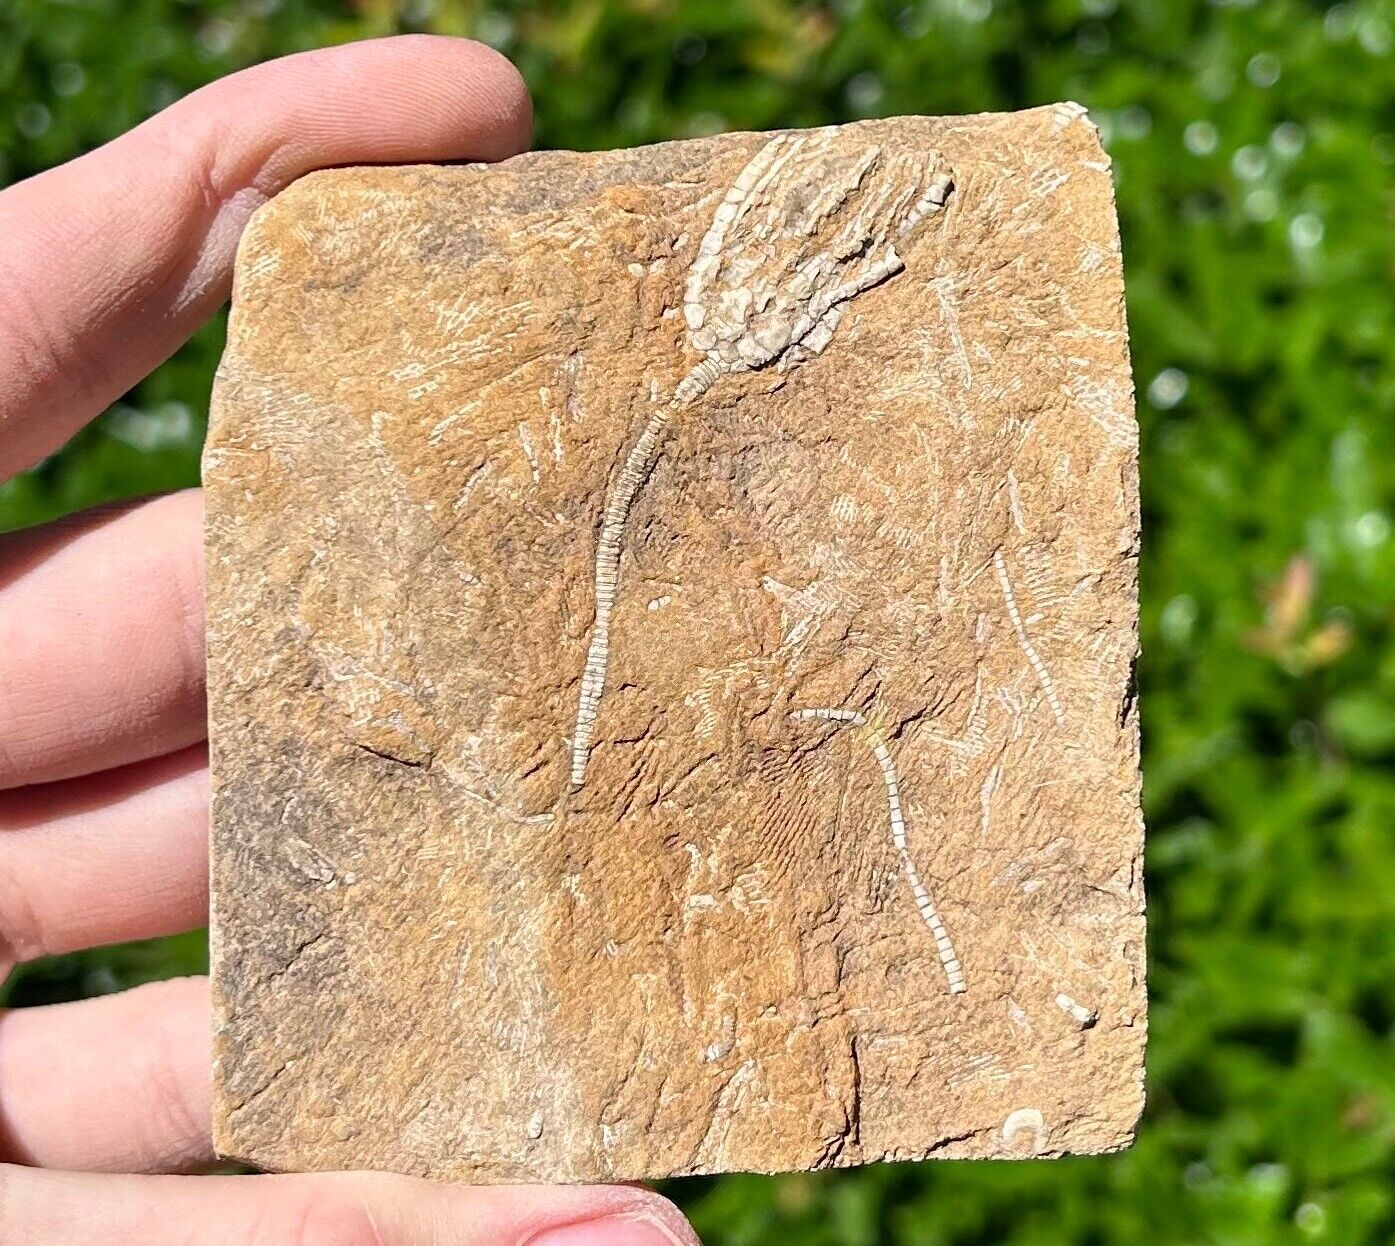 NICE Fossil Crinoid with Stem in Matrix Alabama Bangor Limestone Formation